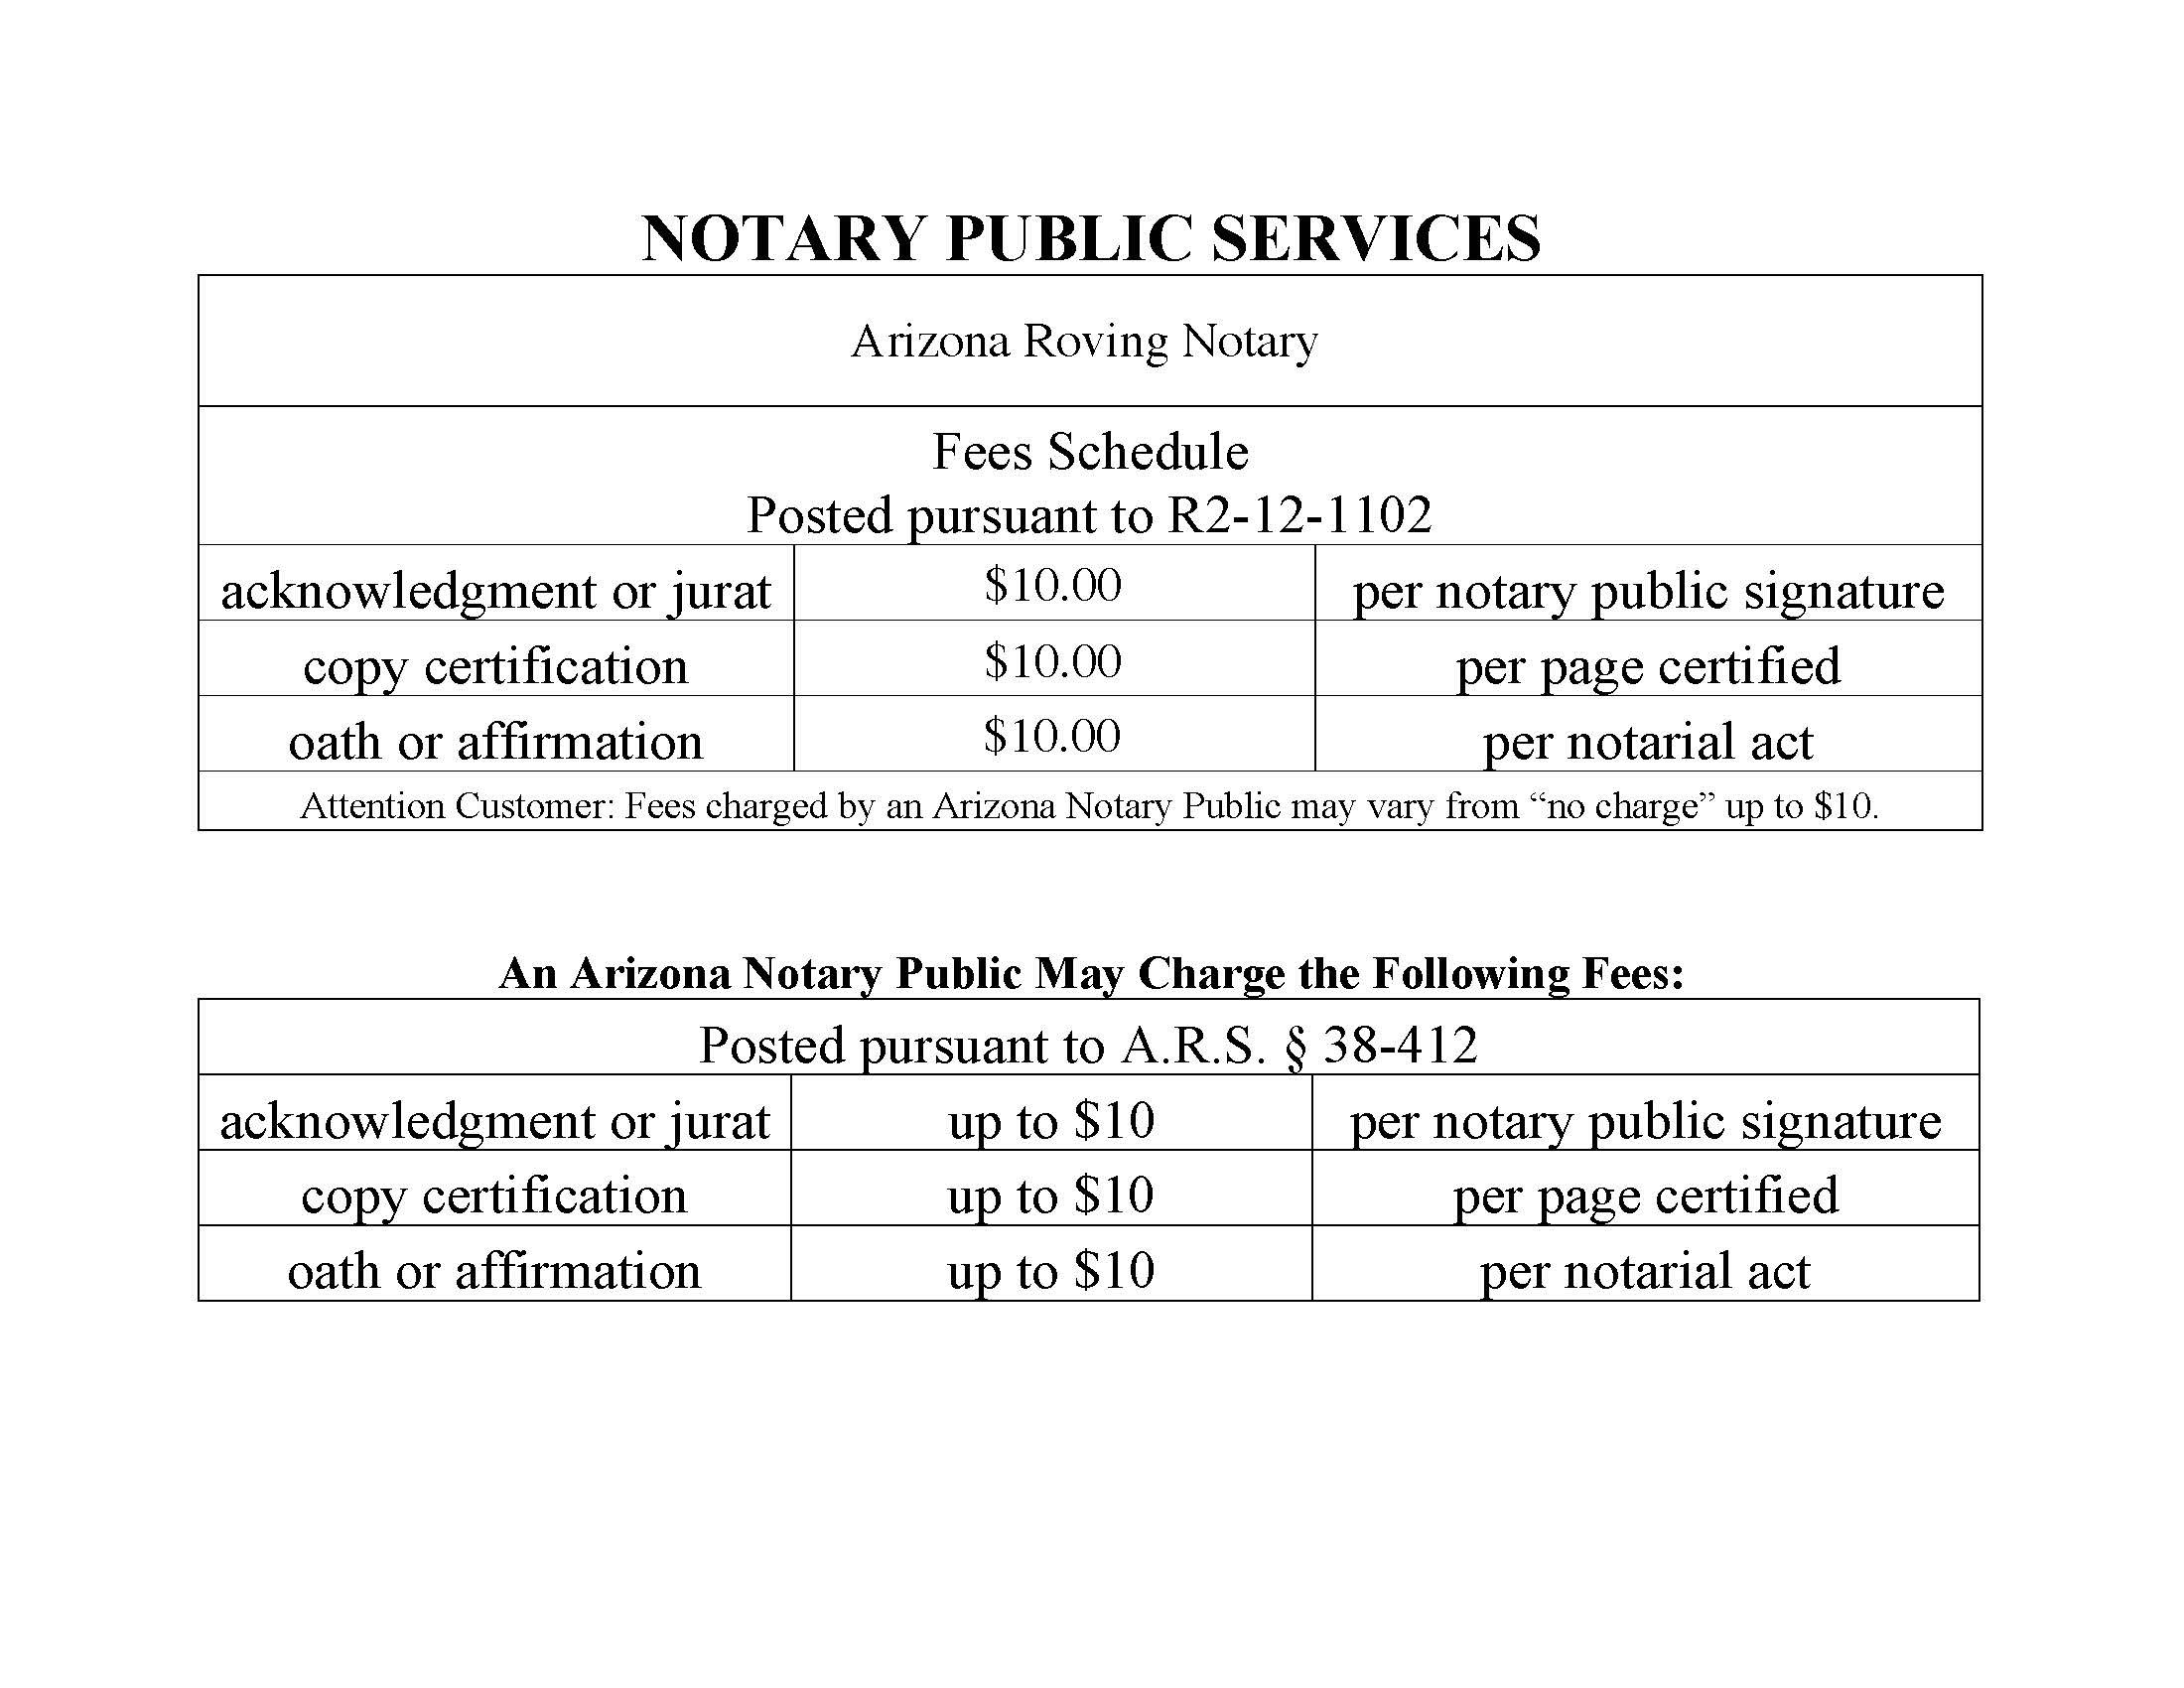 AZ Regulated Fee Schedule for AZ Roving Notary